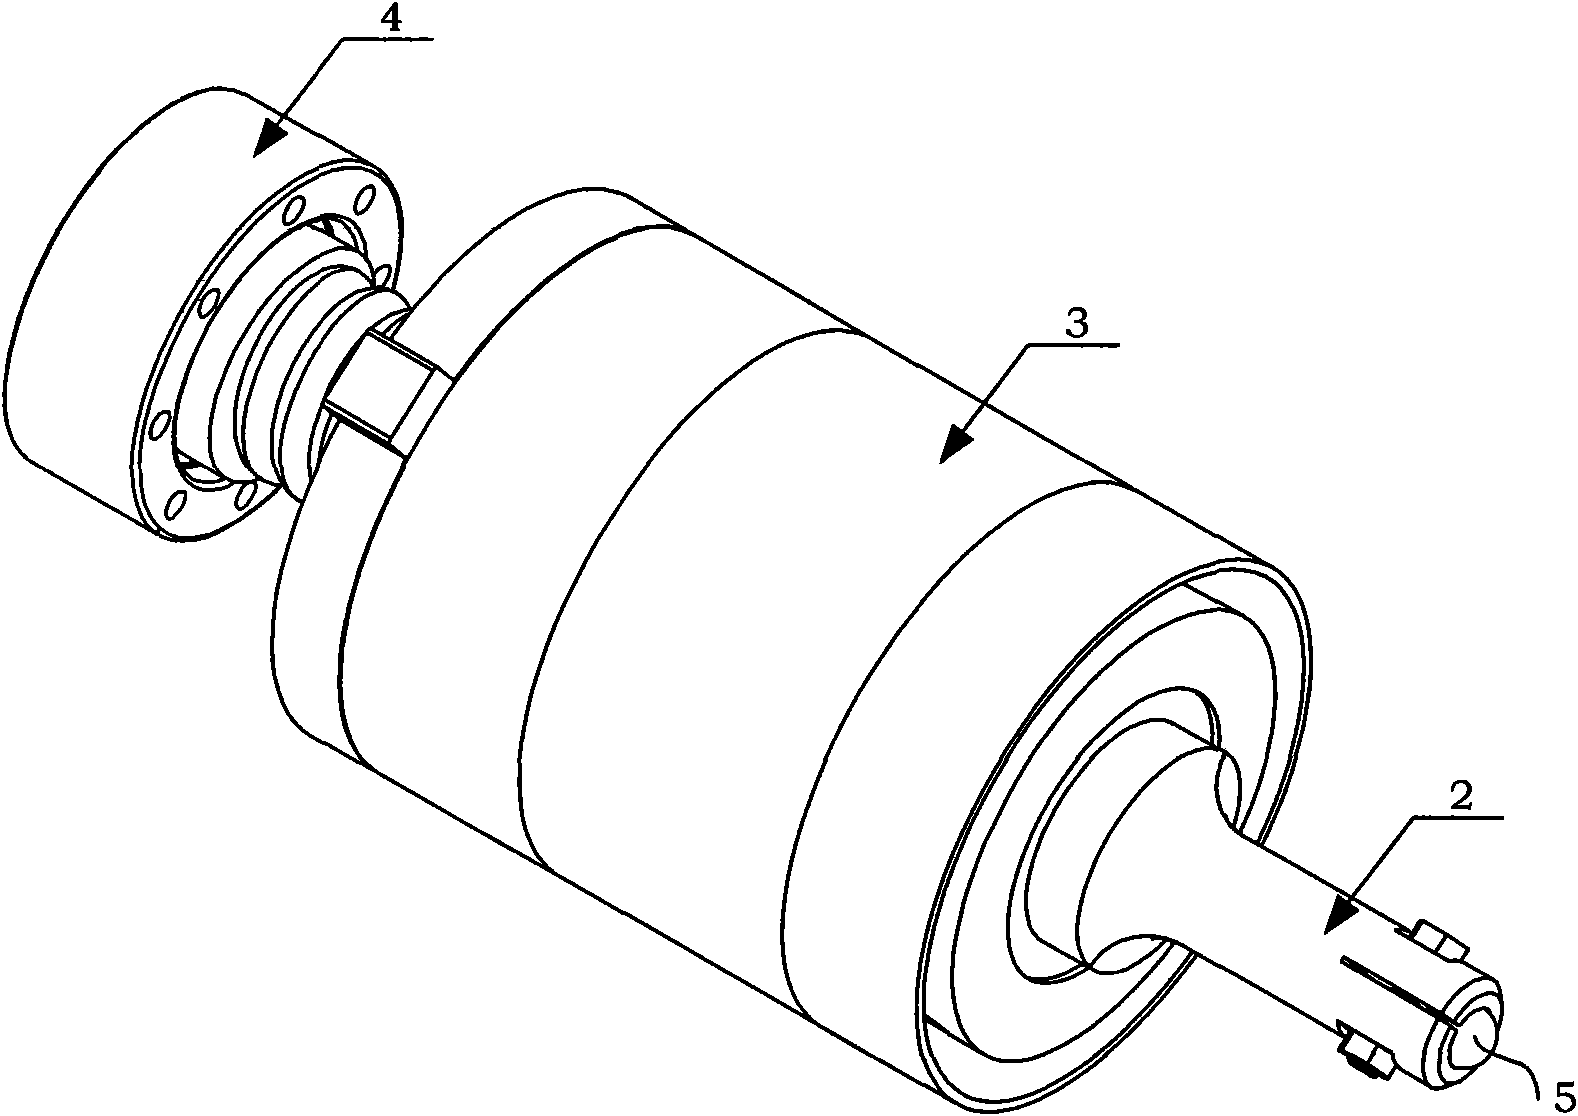 Ultraphonic elliptical vibration and extrusion processing device based on double-excitation longitudinal bending elliptical energy converter